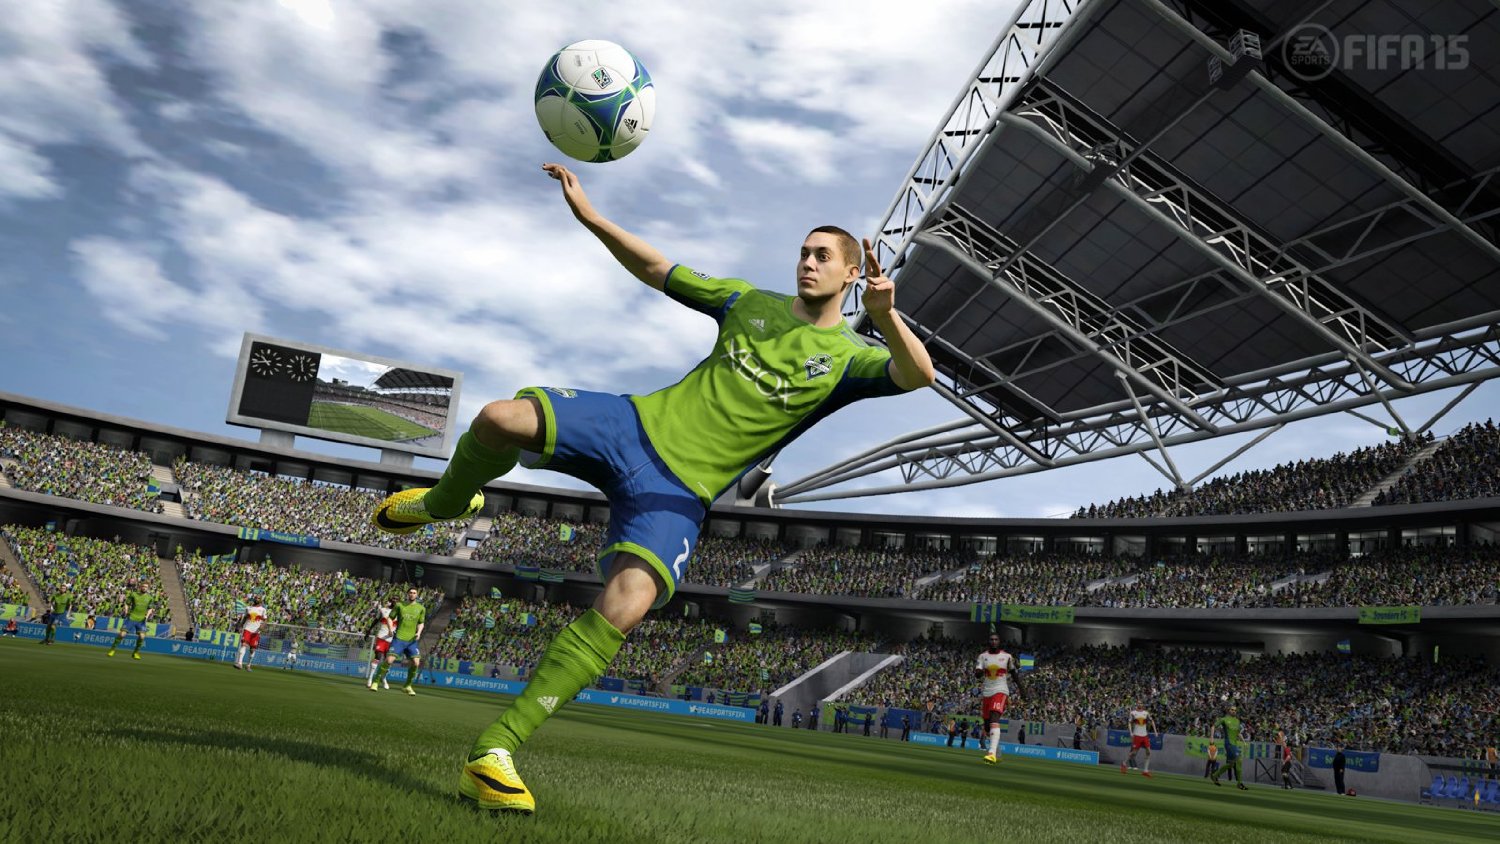 FIFA 15FIFA 15PCʽLMAOĺV1.1